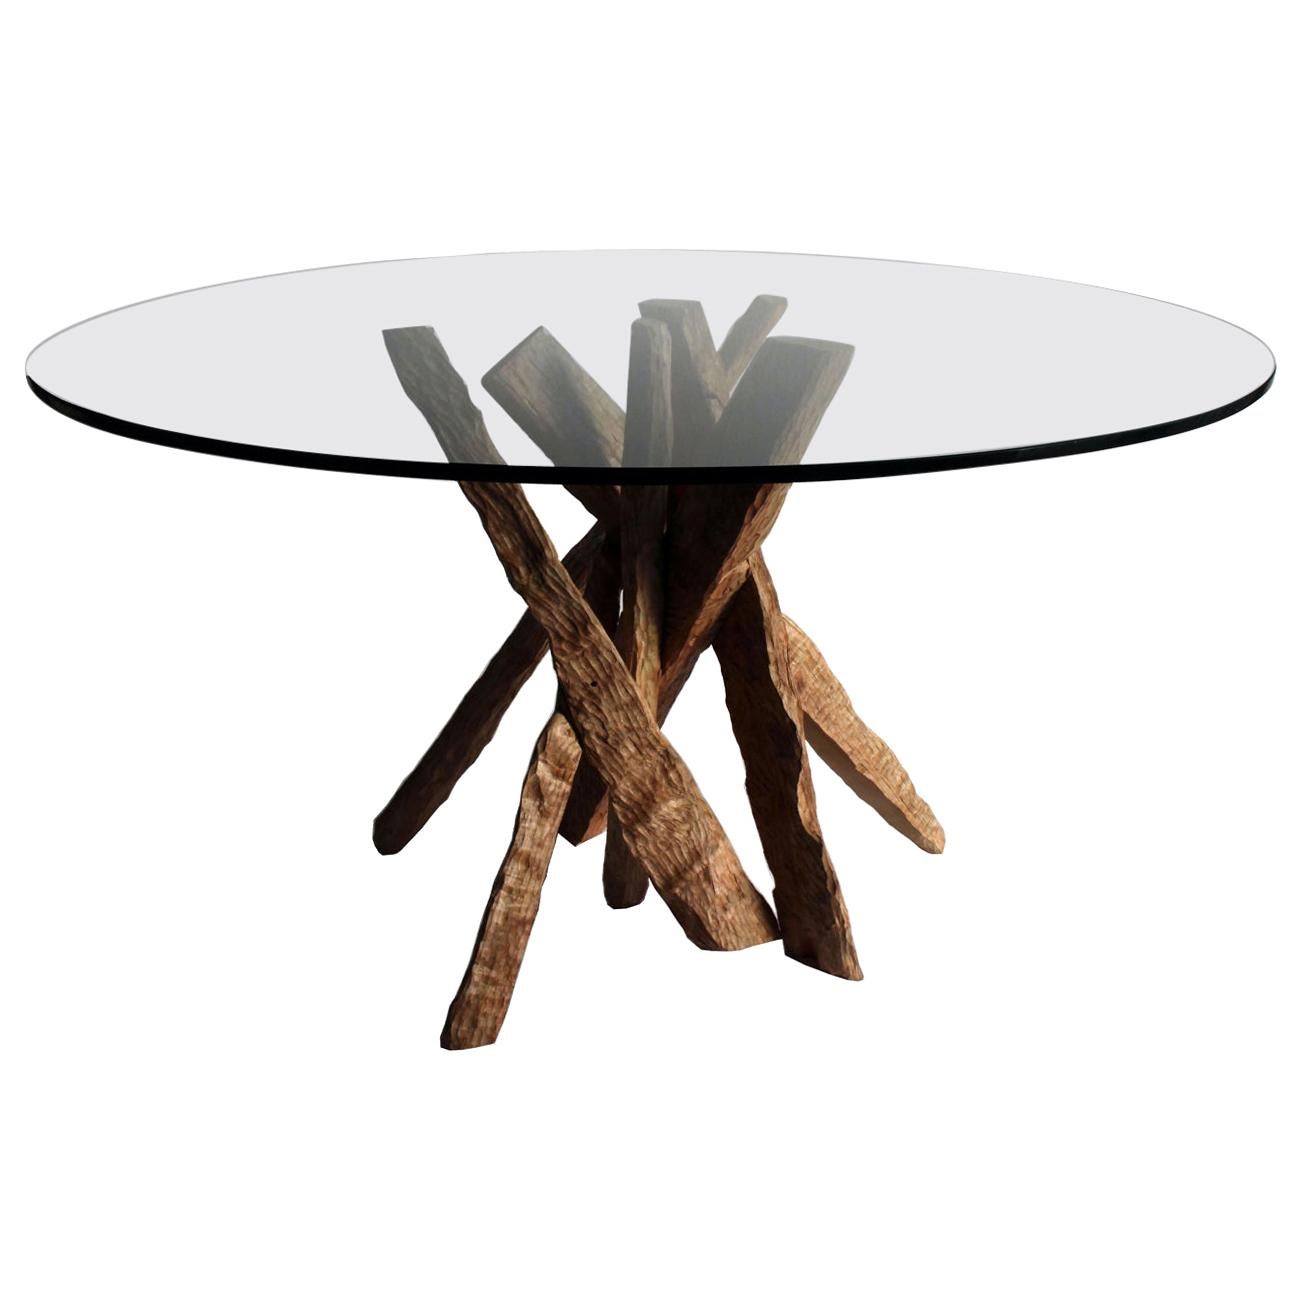 Amazzonia Table by Pietro Meccani